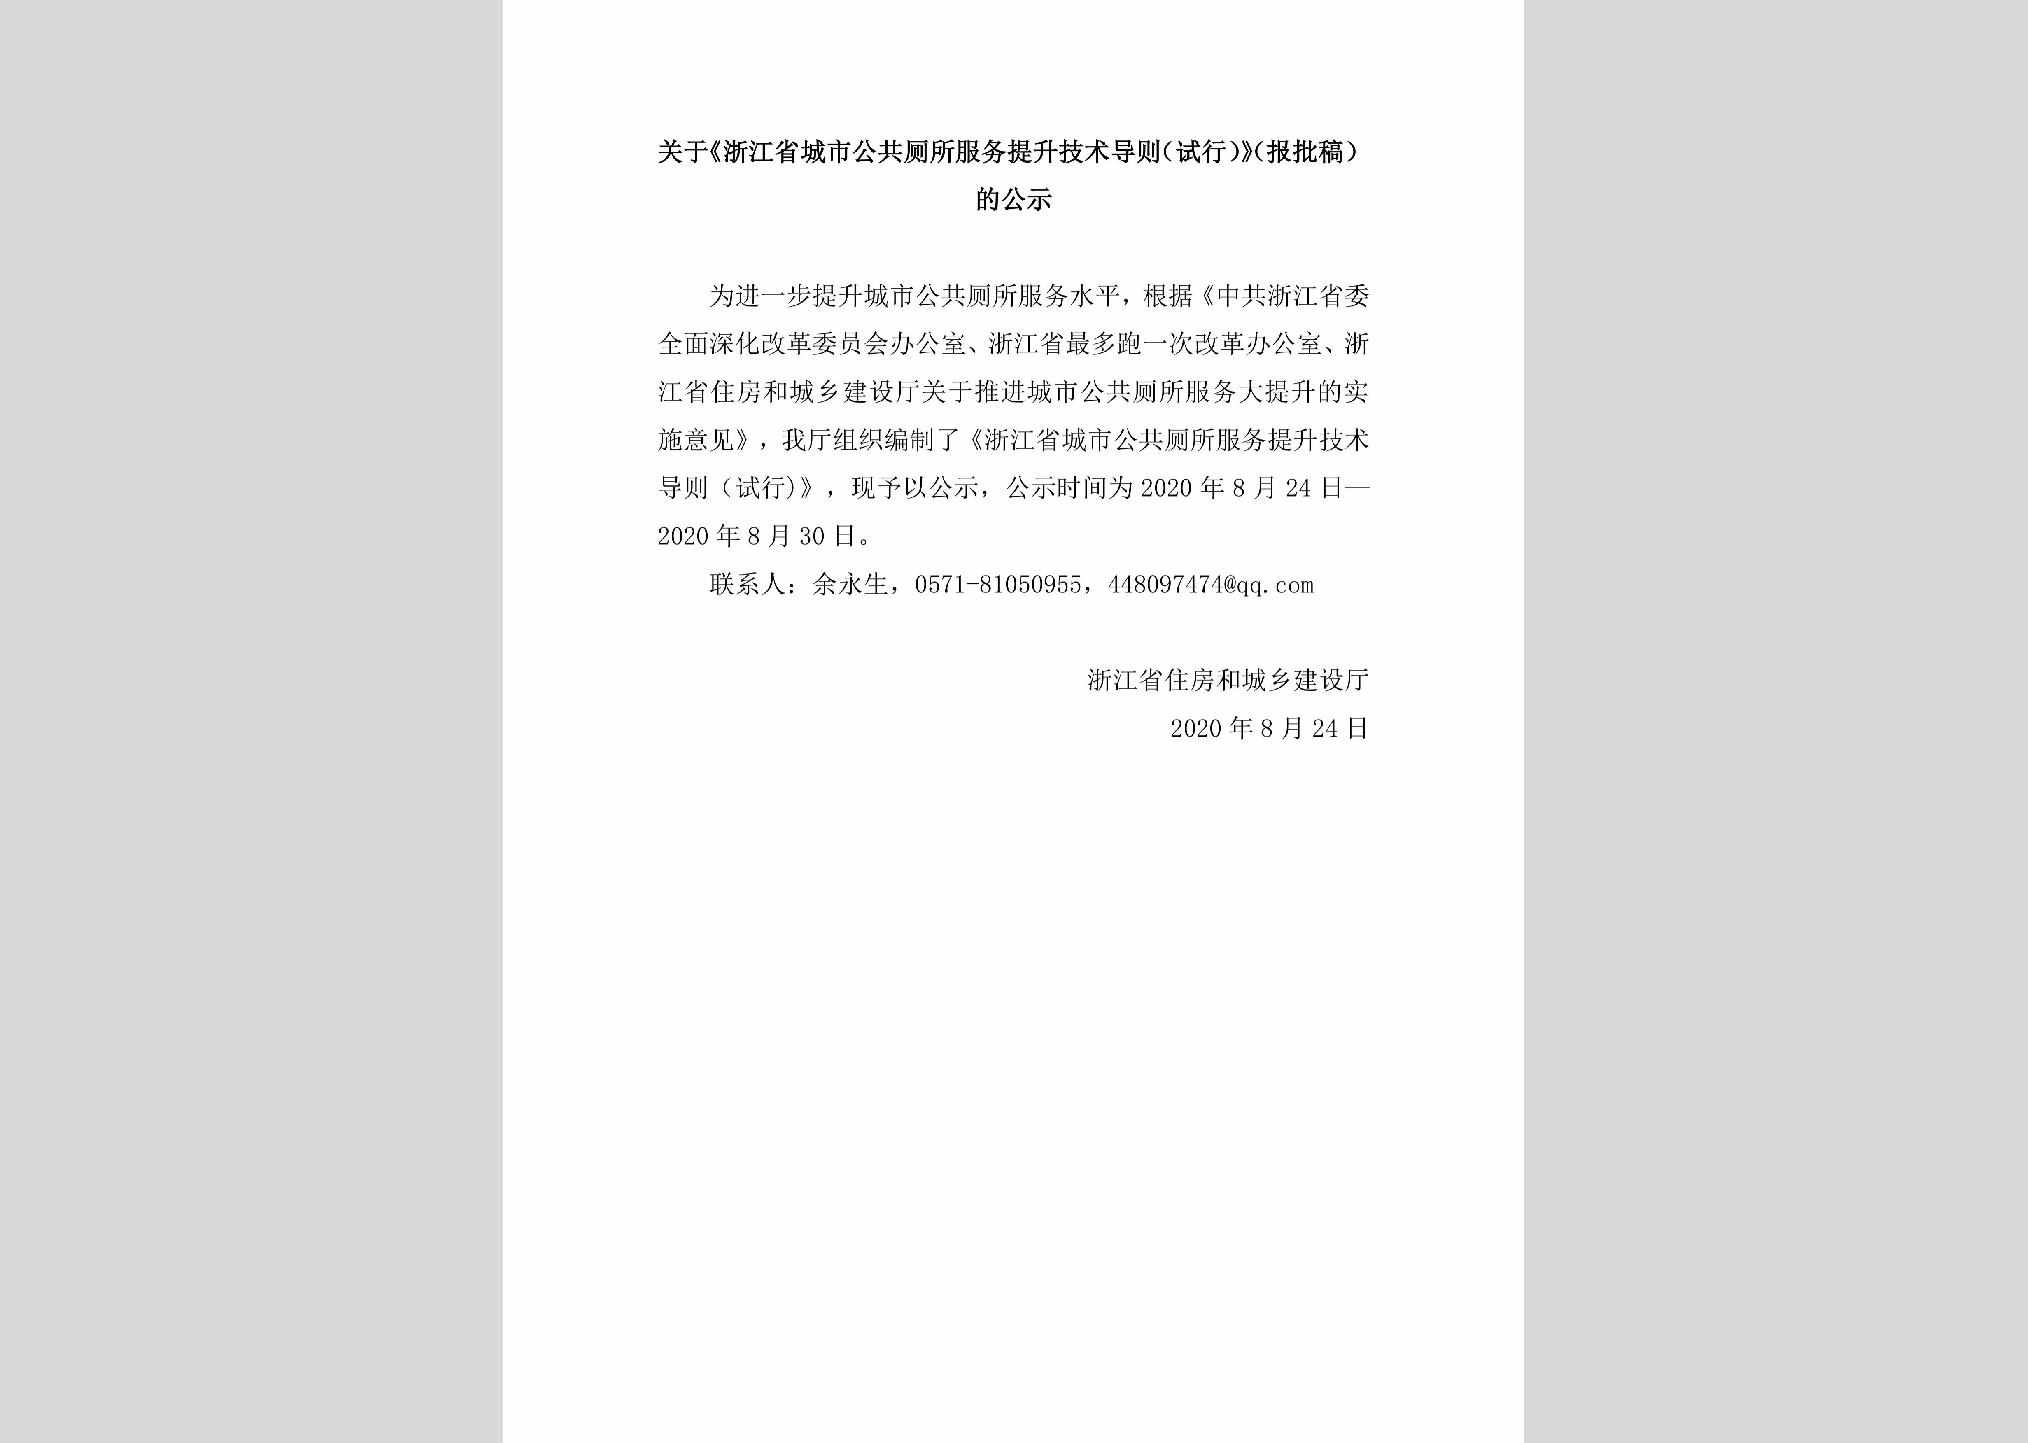 ZJ-GGCSFWTS-2020：关于《浙江省城市公共厕所服务提升技术导则（试行）》（报批稿）的公示